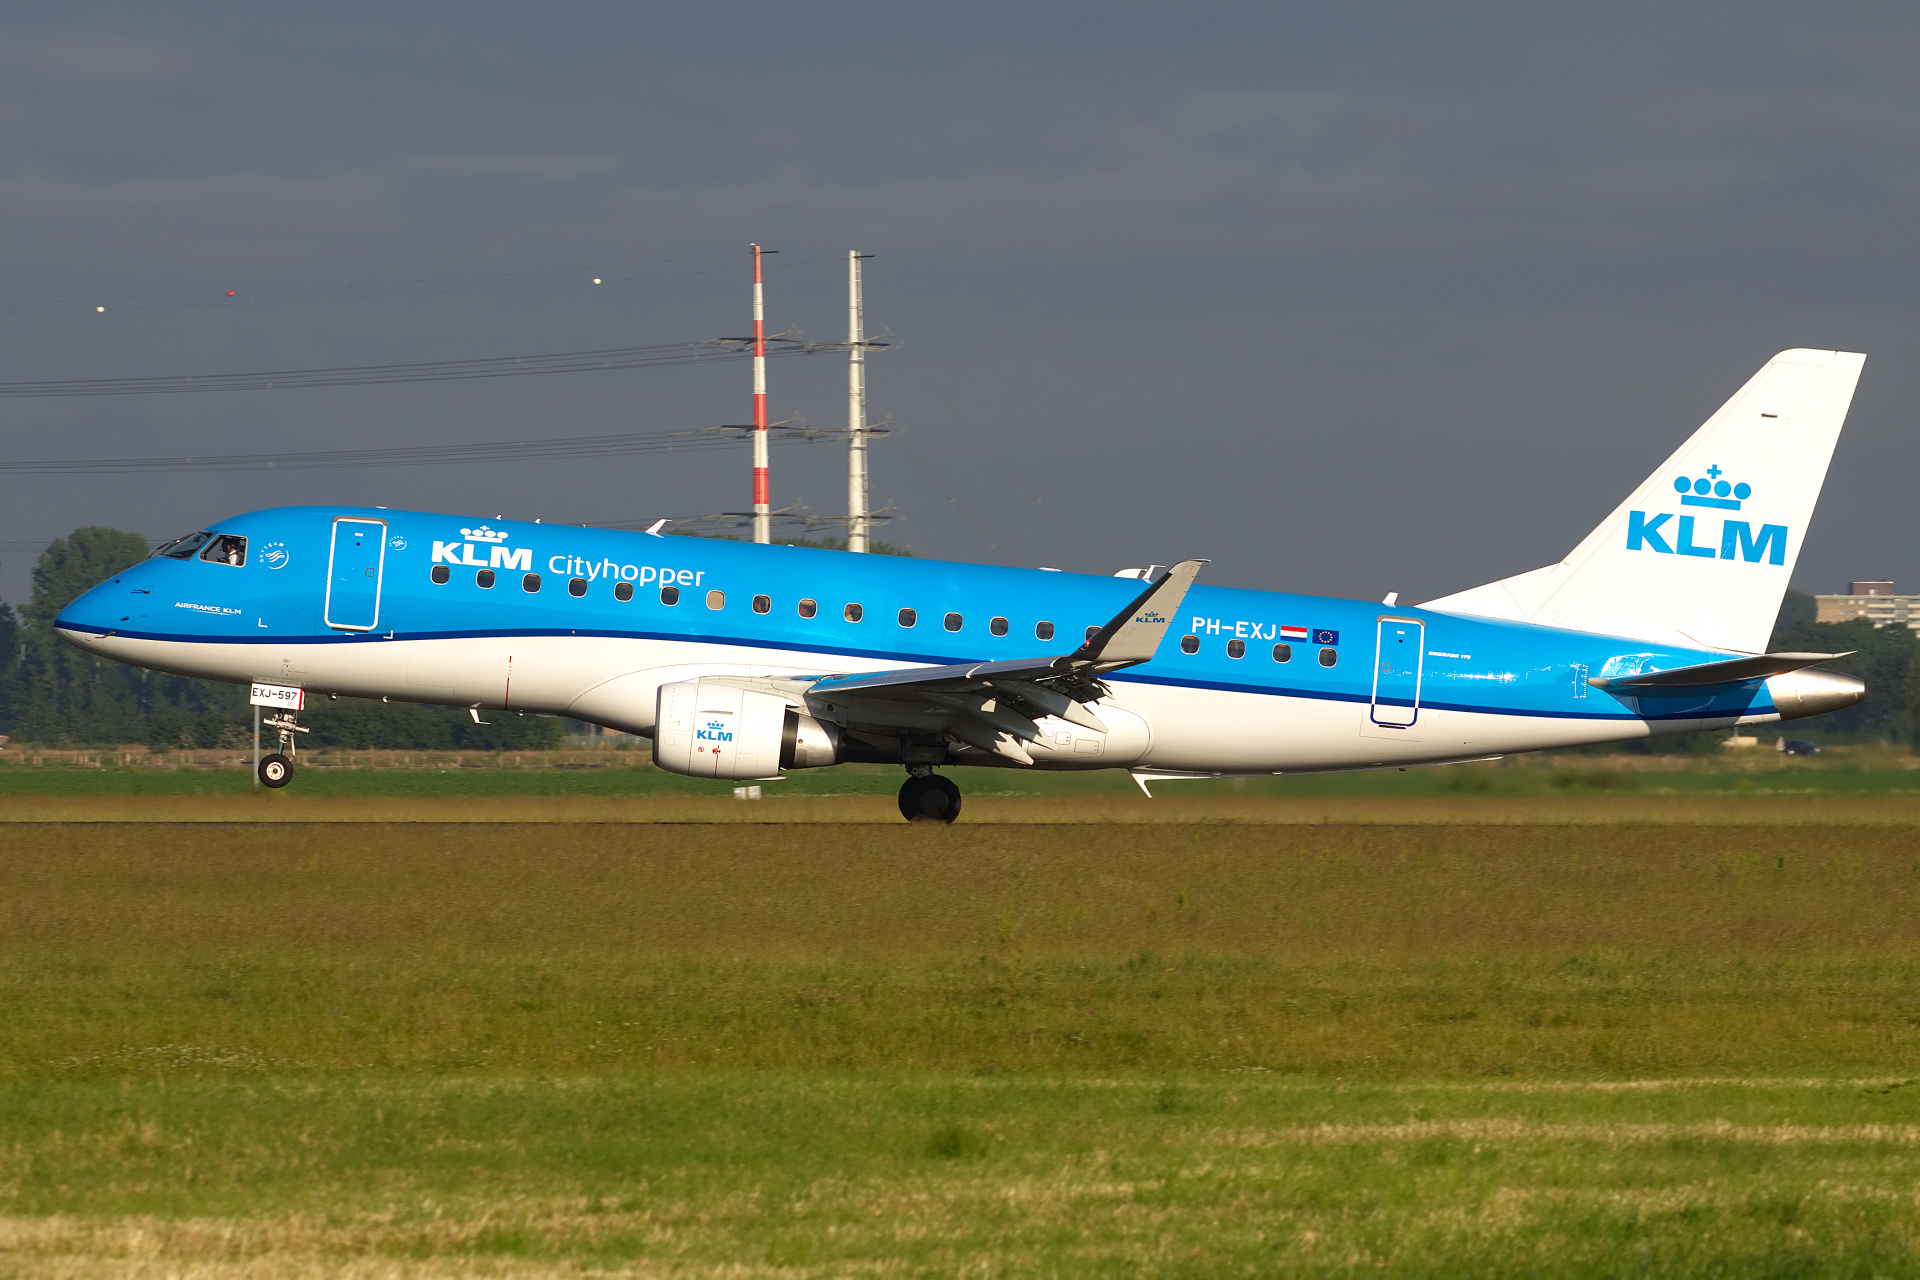 PH-EXJ (Samoloty » Spotting na Schiphol » Embraer E175 » KLM Cityhopper)